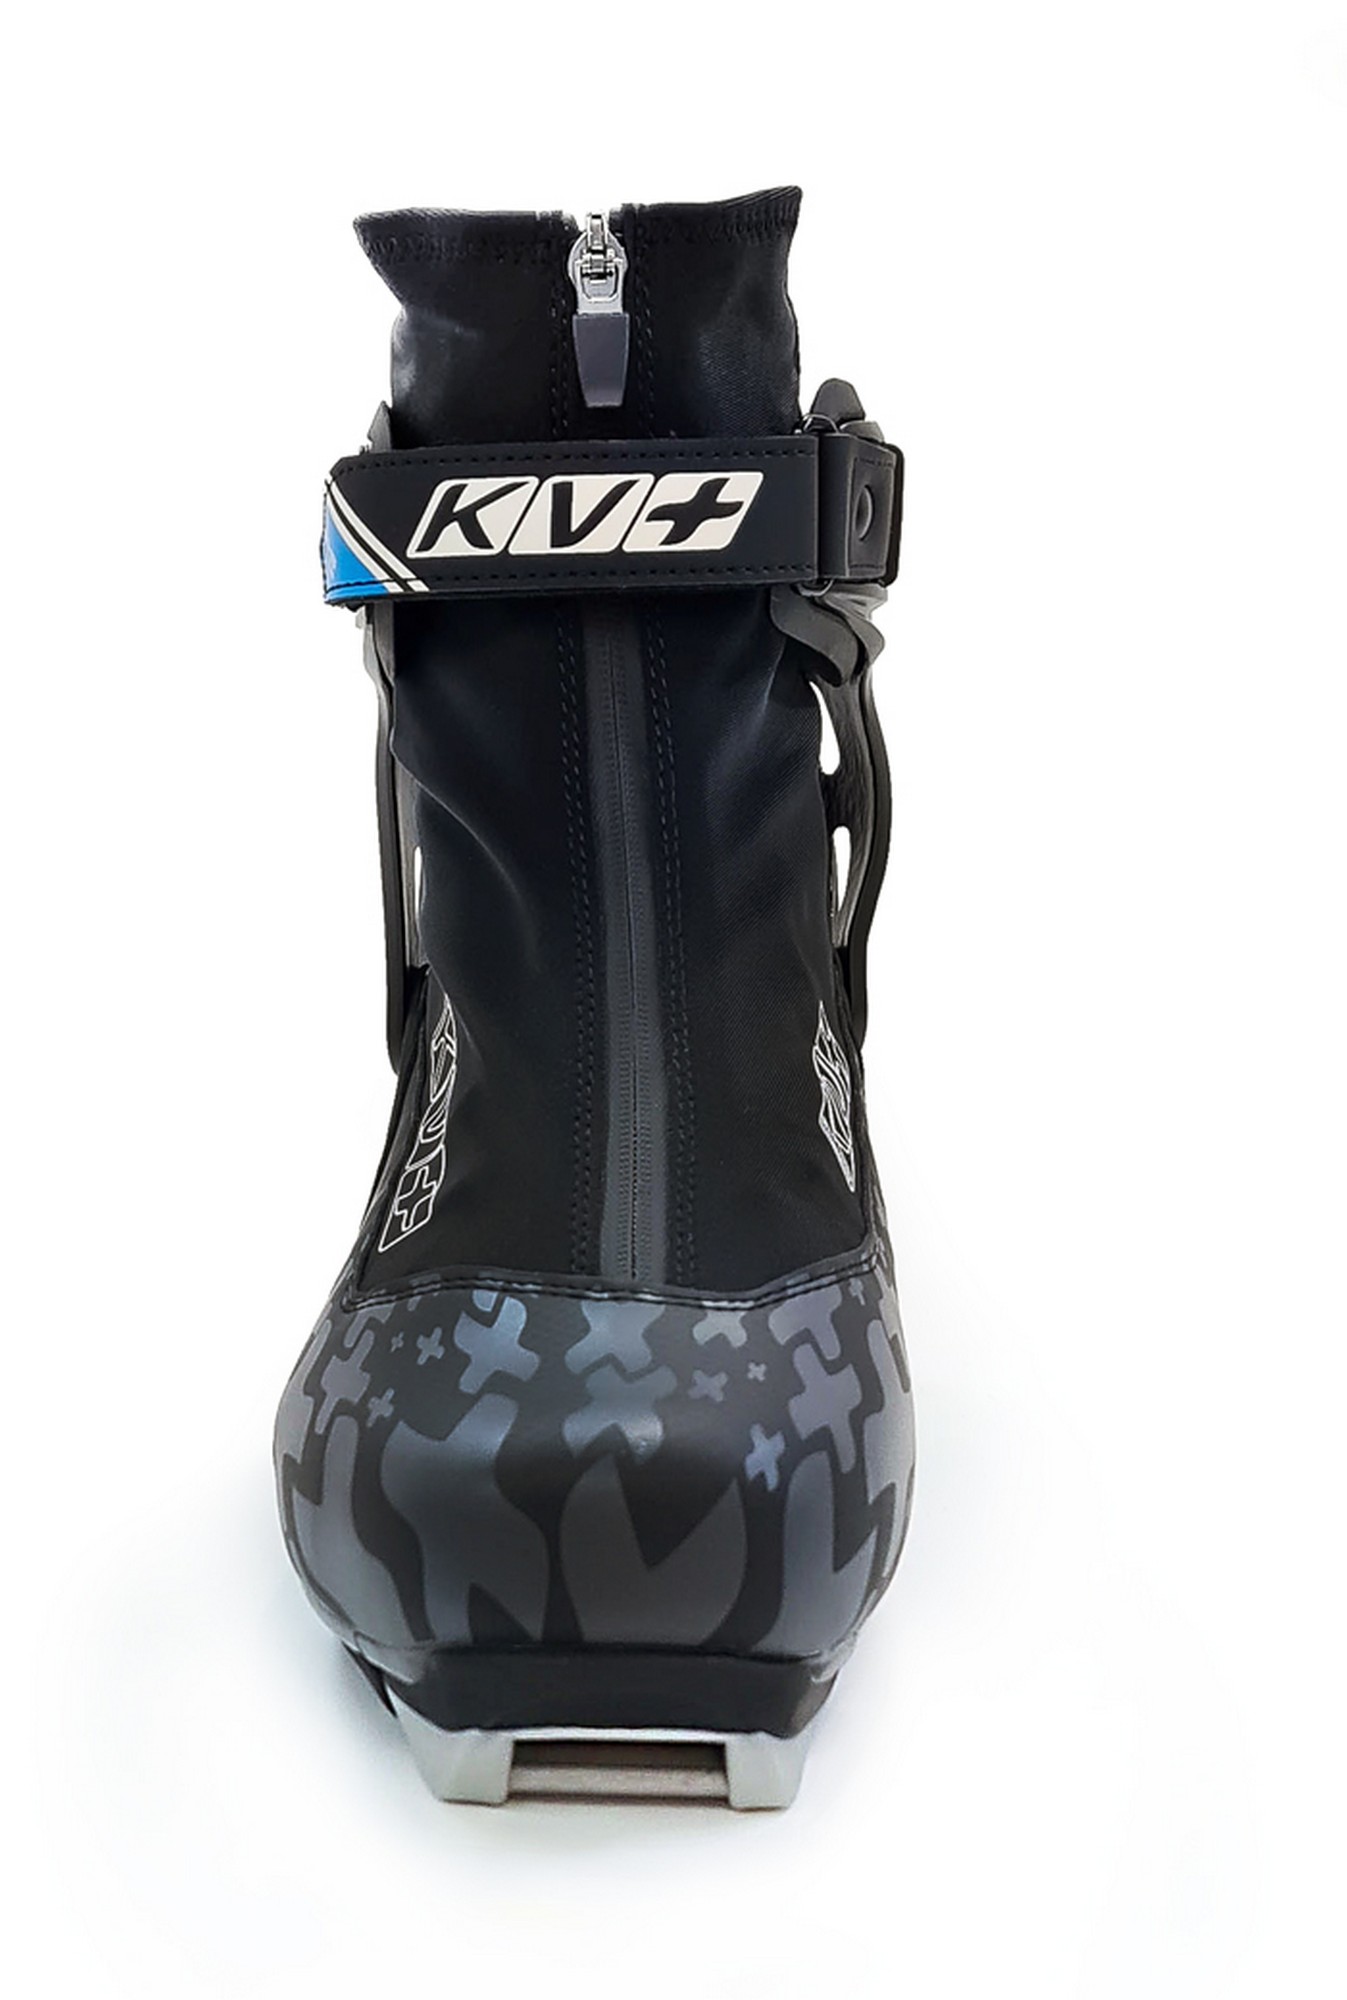 Лыжные ботинки KV+ CH5, Skate 22BT03 черный 1347_2000